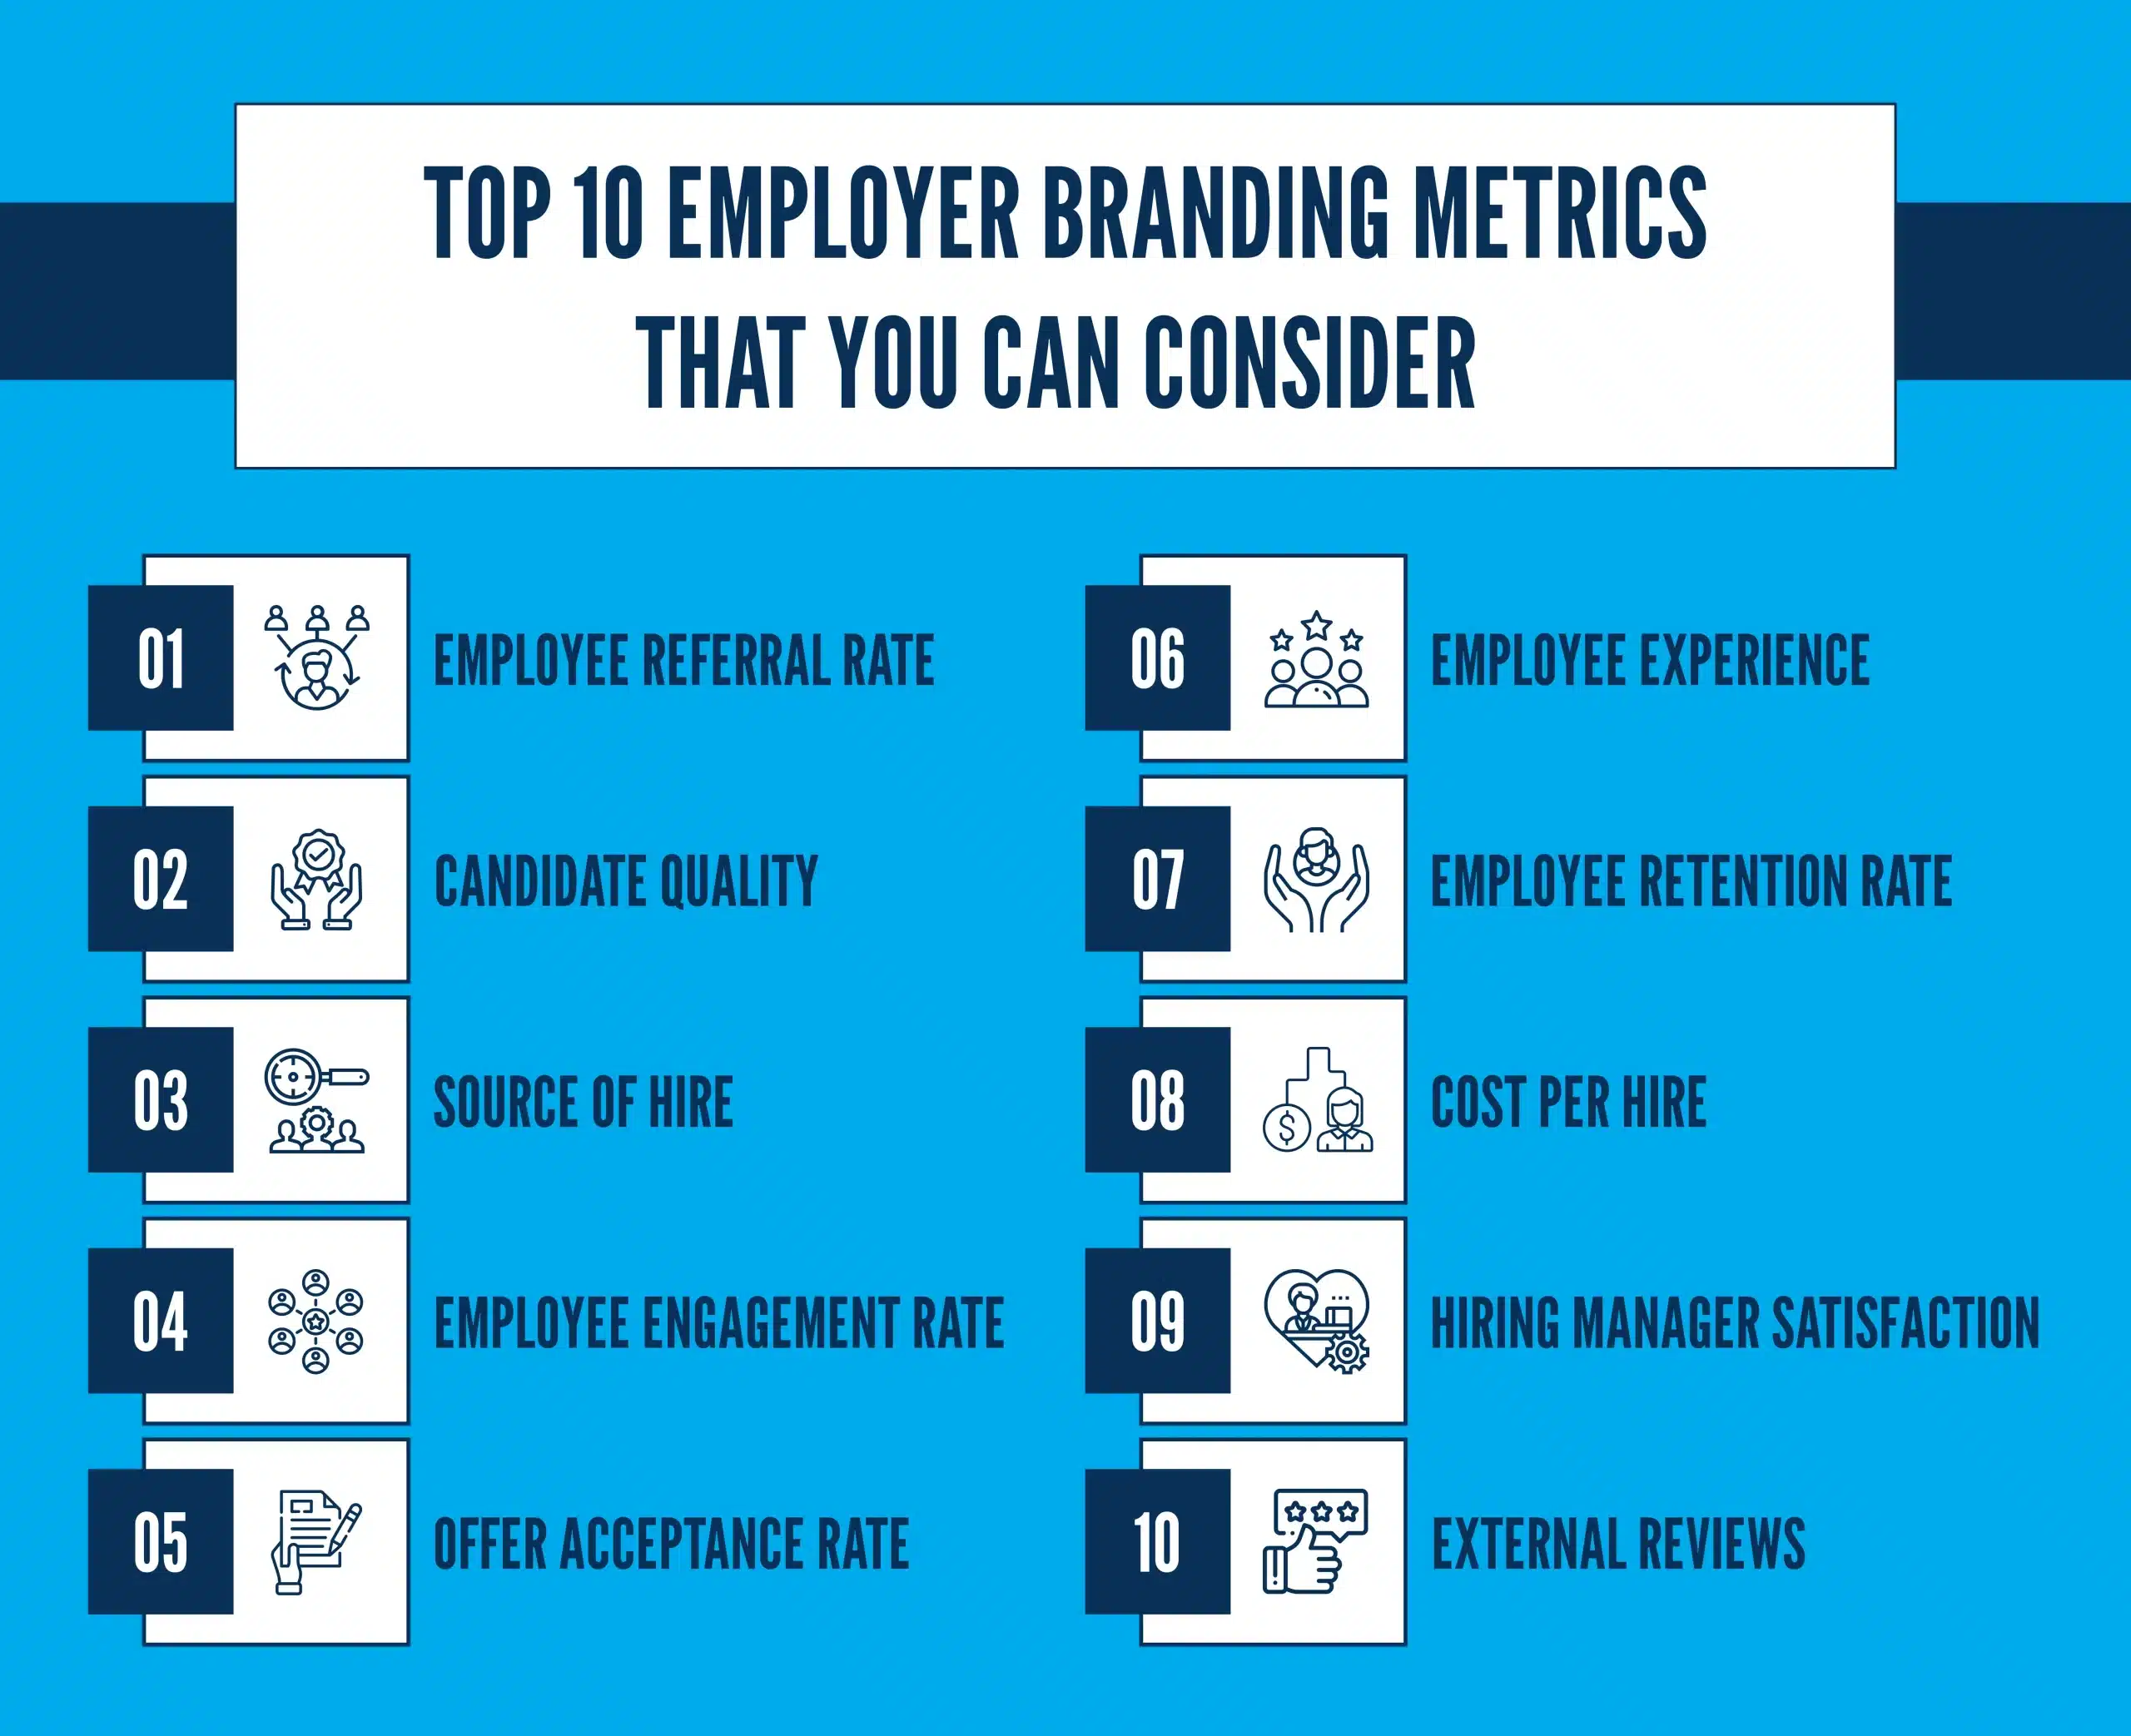 Employer branding metric to consider